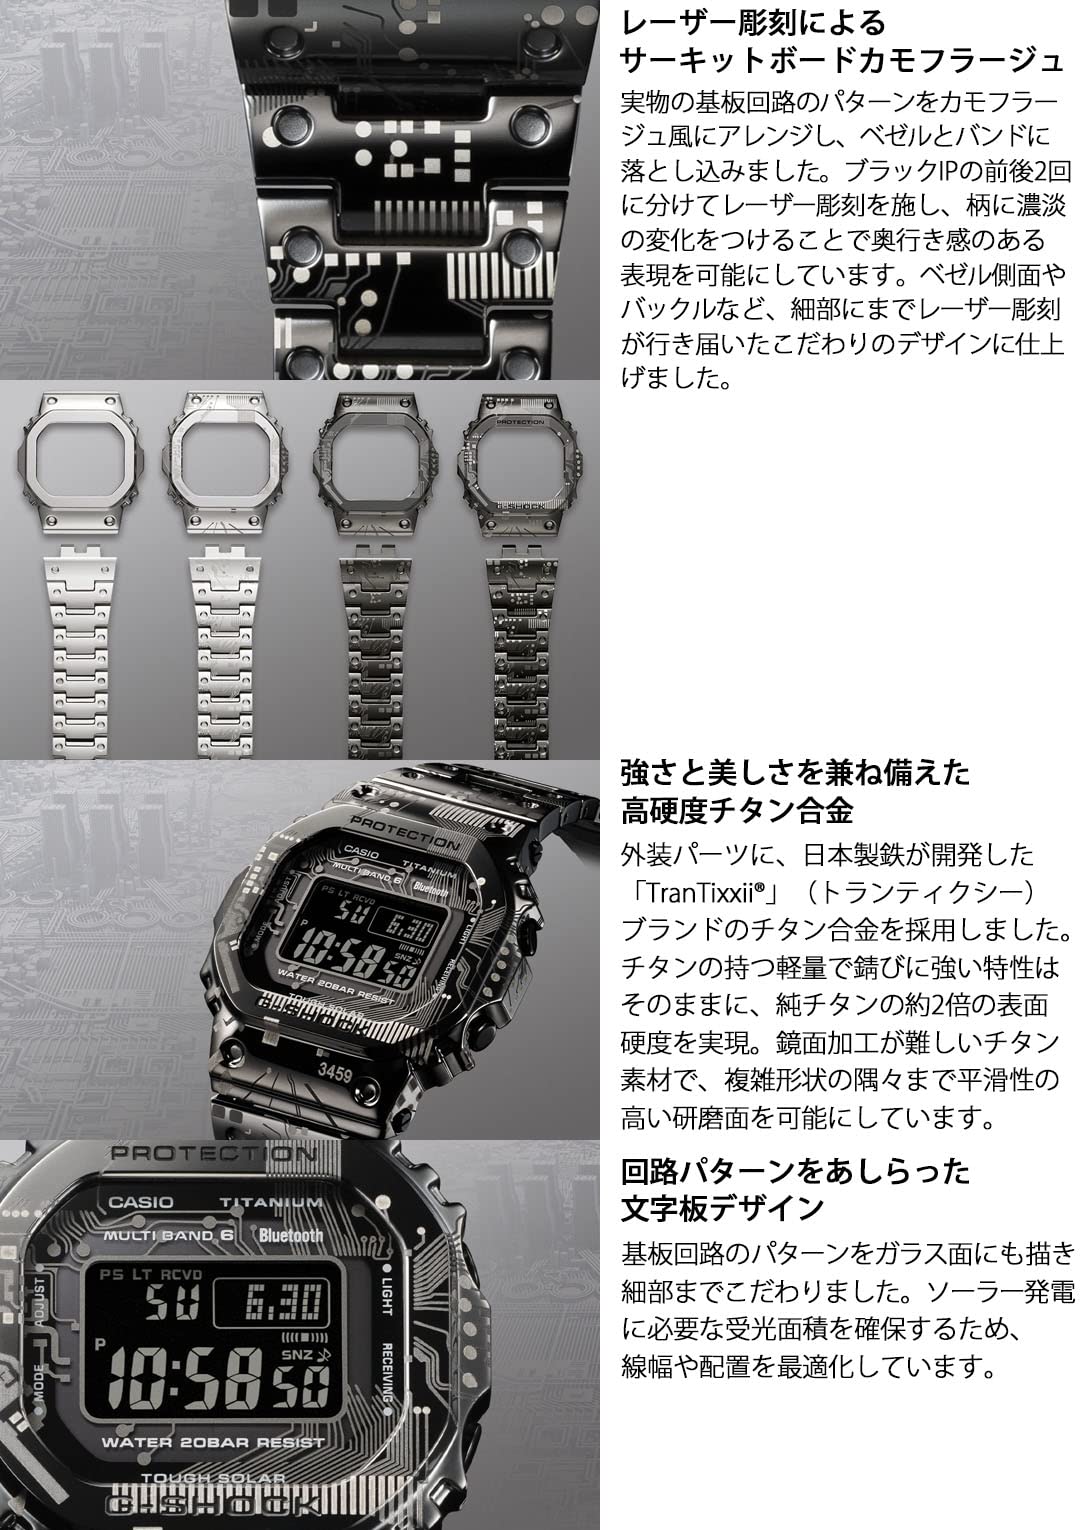 Casio GMW-B5000TCC-1JR [G-Shock GMW-B5000 Series Special Model] Watch Japan Import Jan 2023 Model black/white